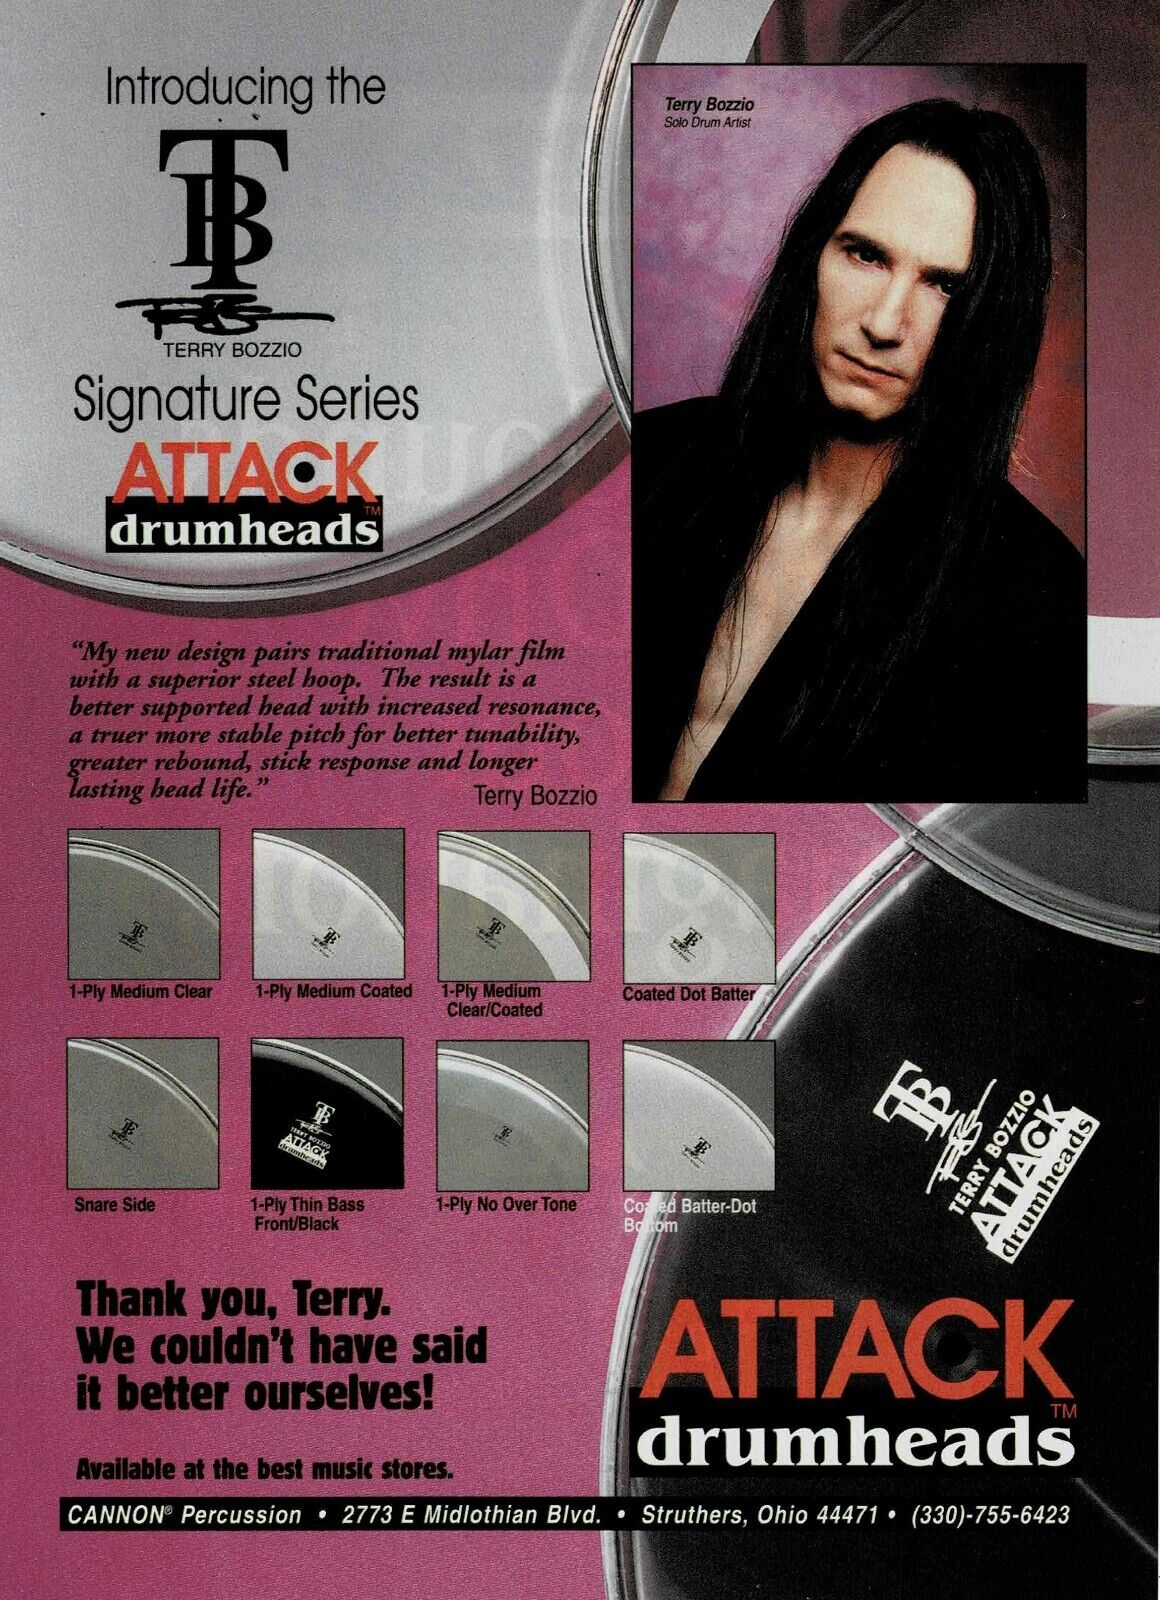 ATTACK Drumheads - Terry Bozzio - 1997 Print Advertisement